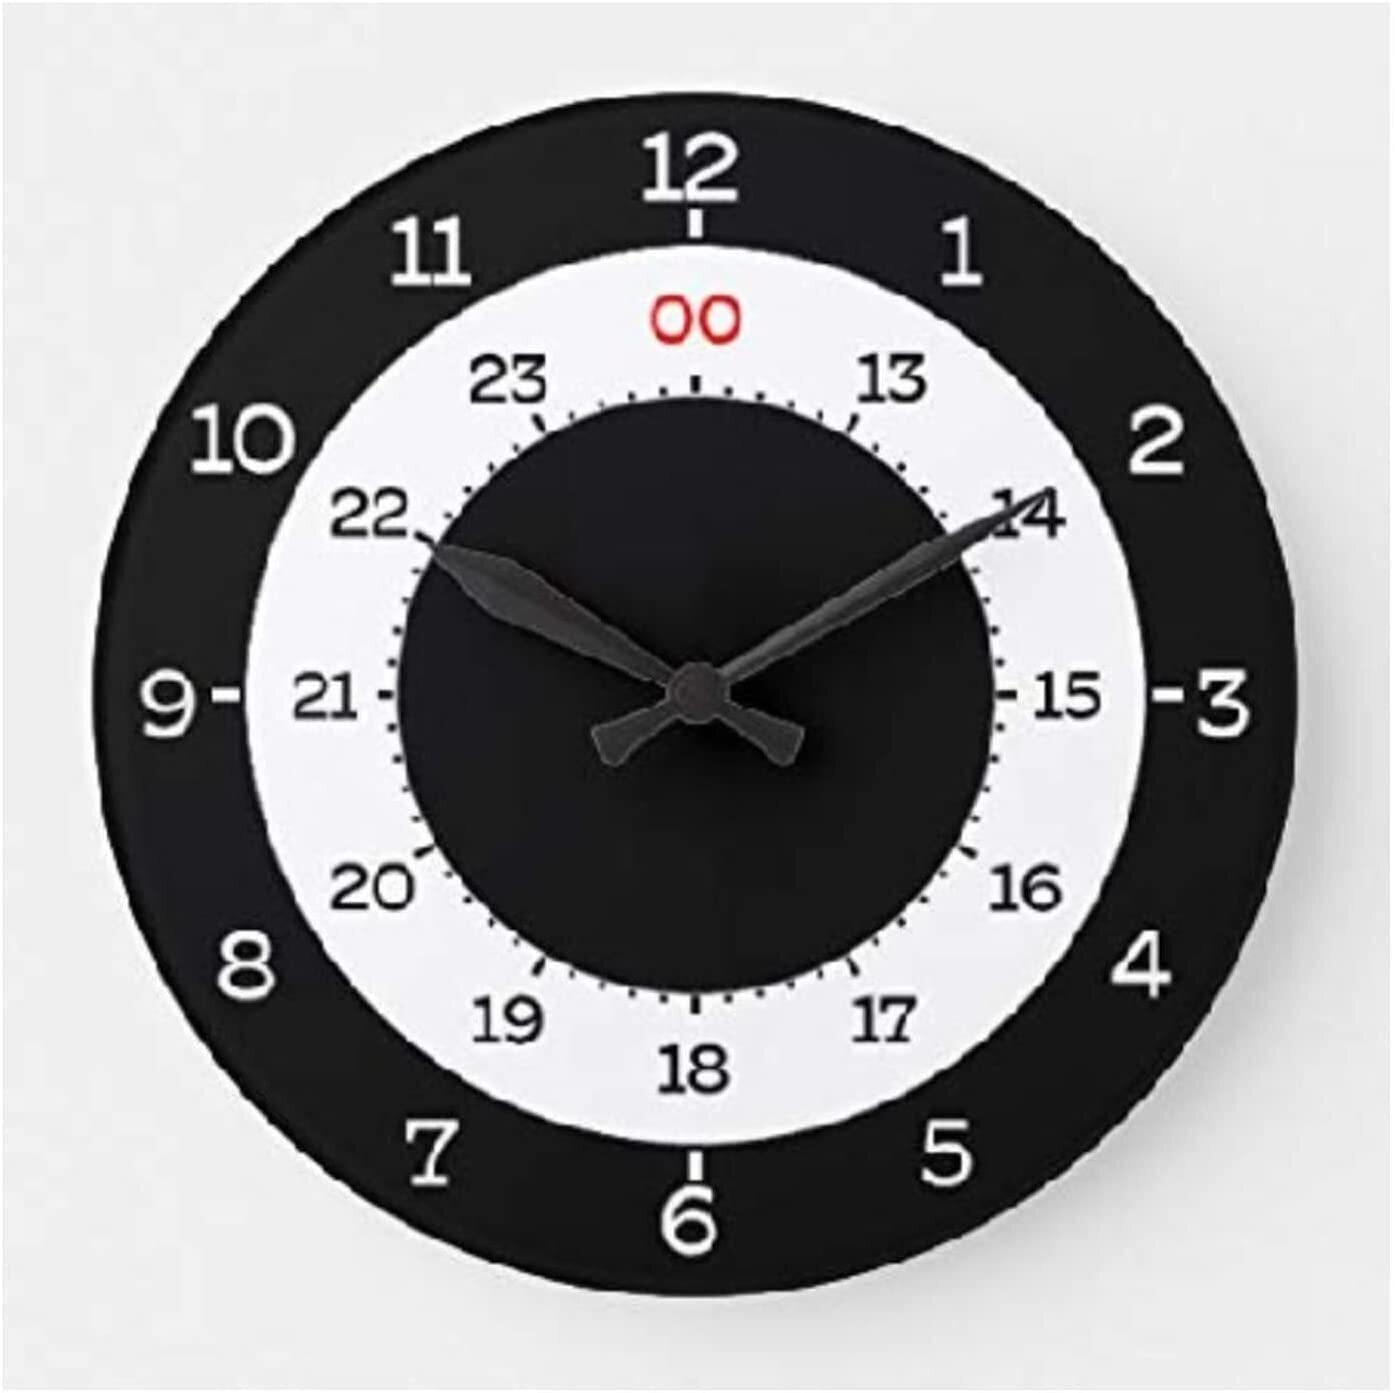 Twelve hour military wall clock